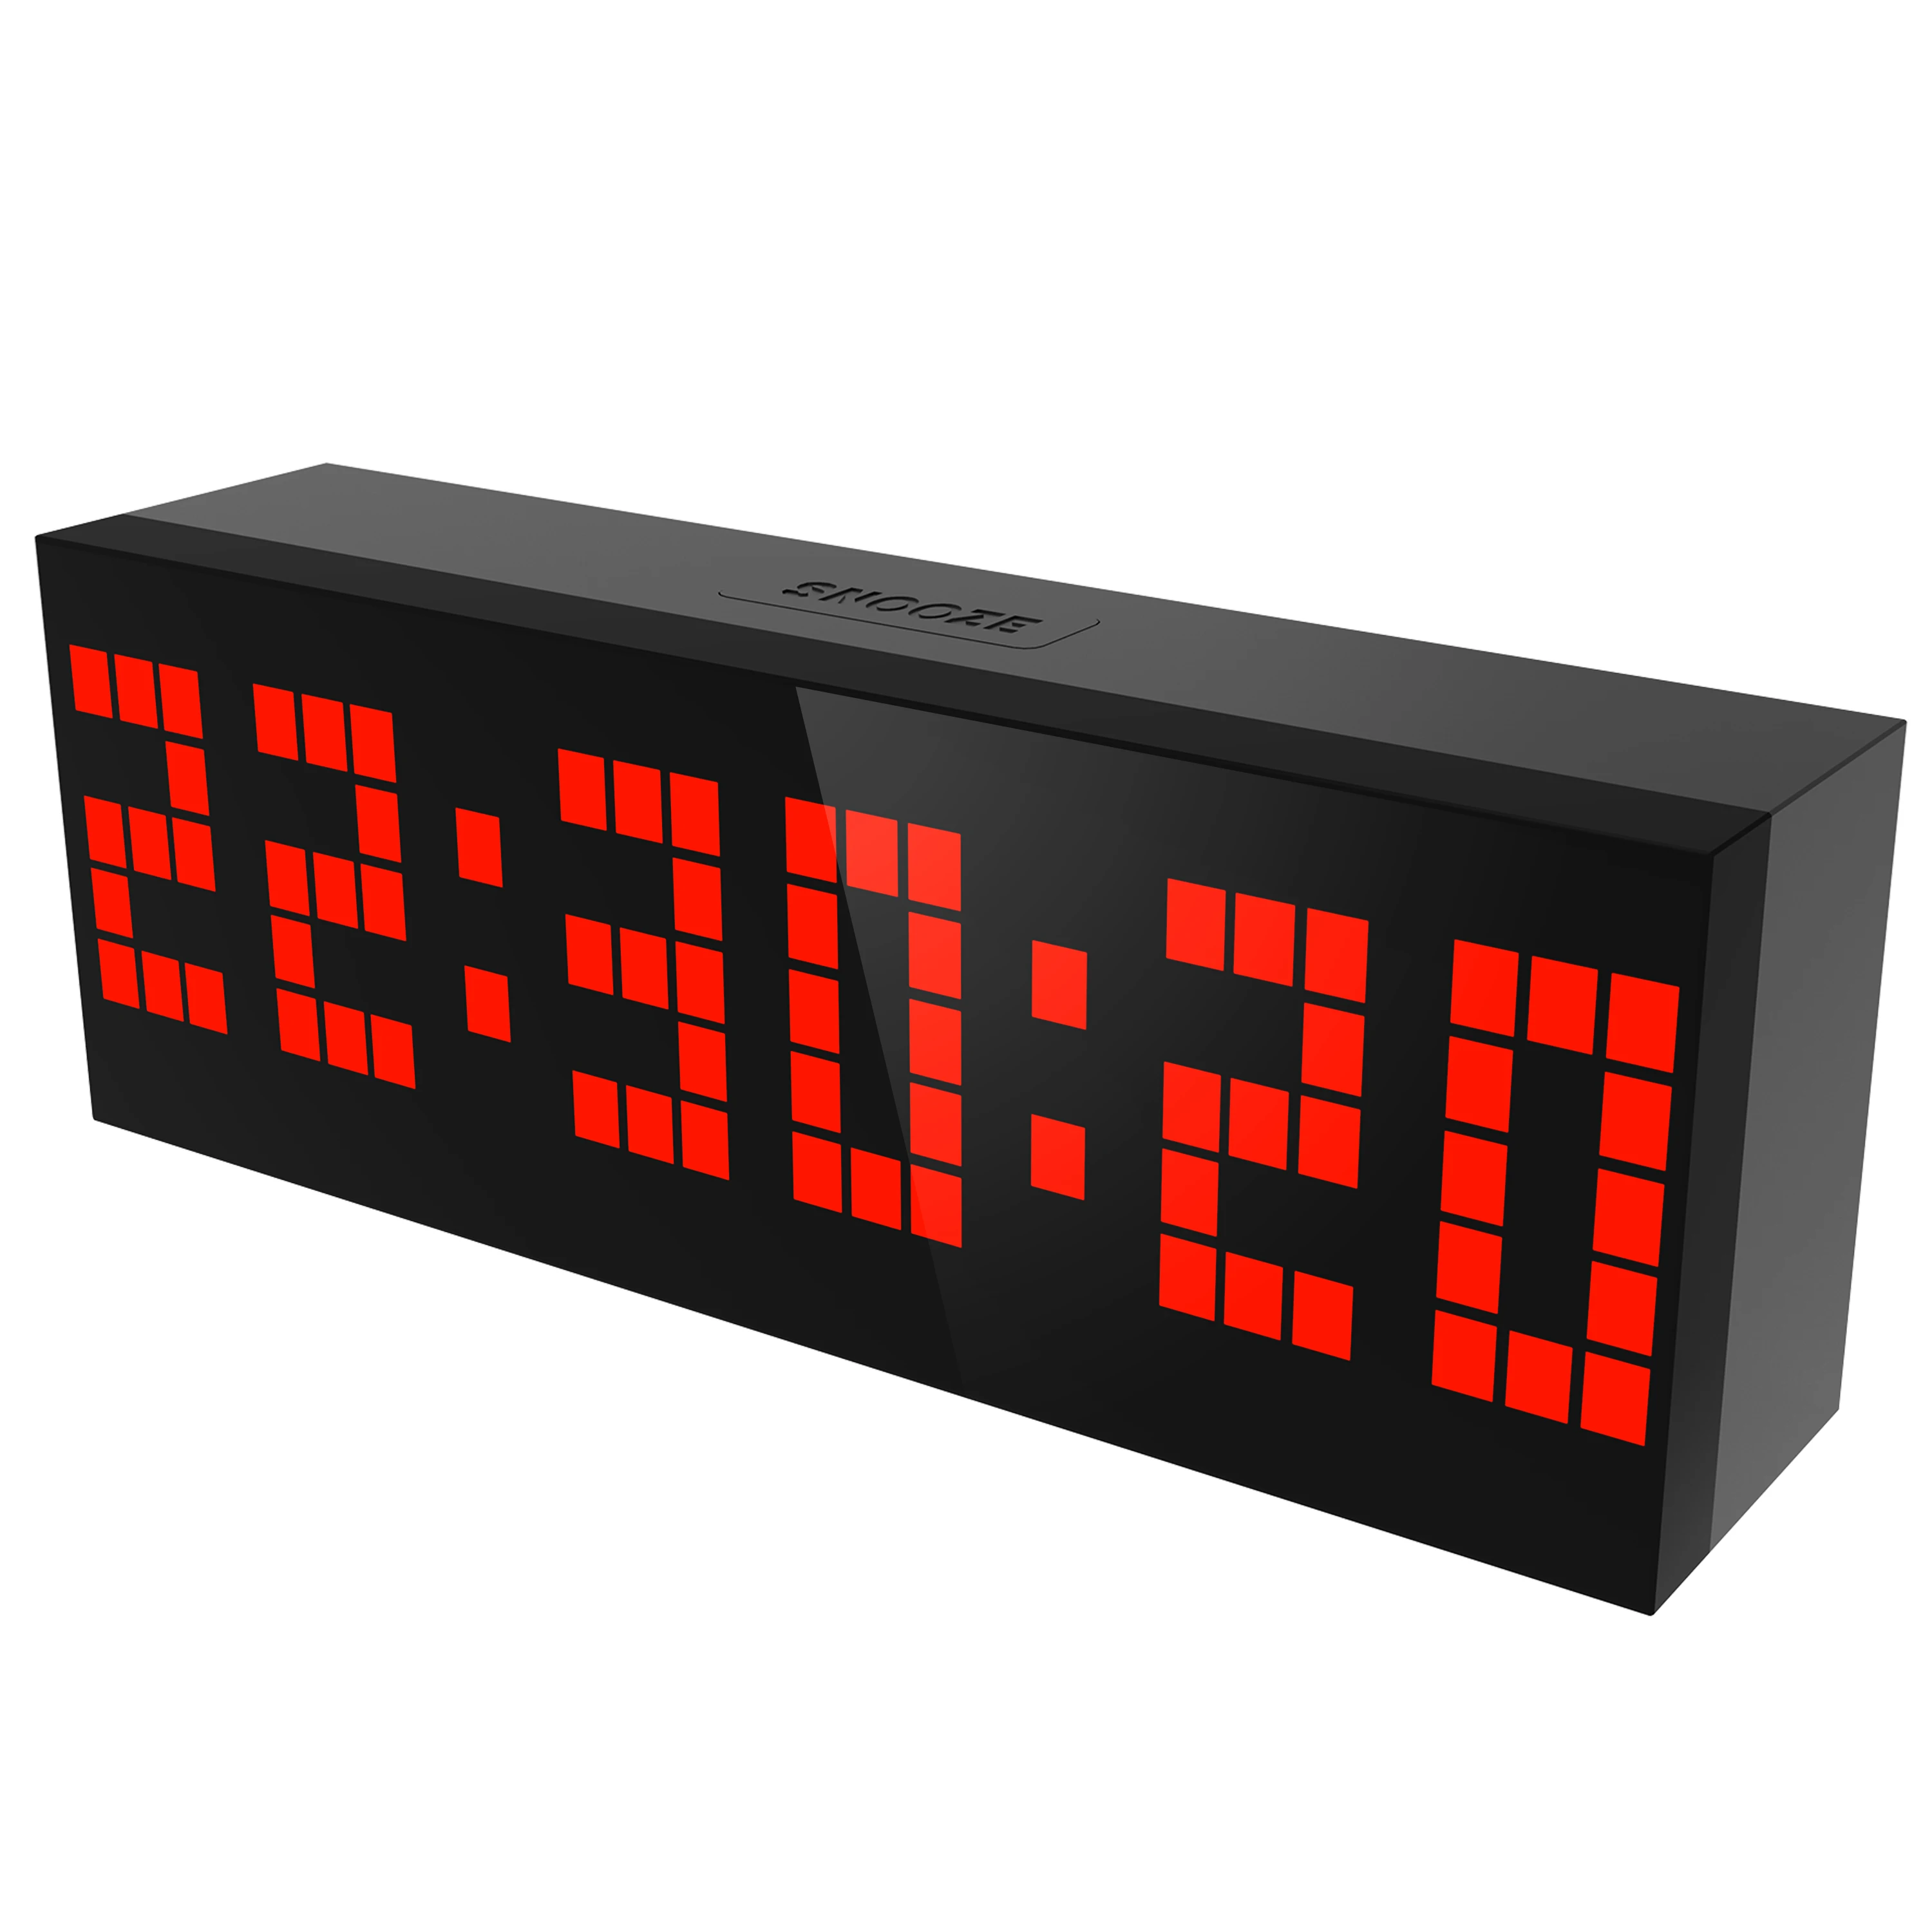 

Best selling 2019 products kitchen clock reloj despertador digital led zegar ścienny reloj digital pared sveglia